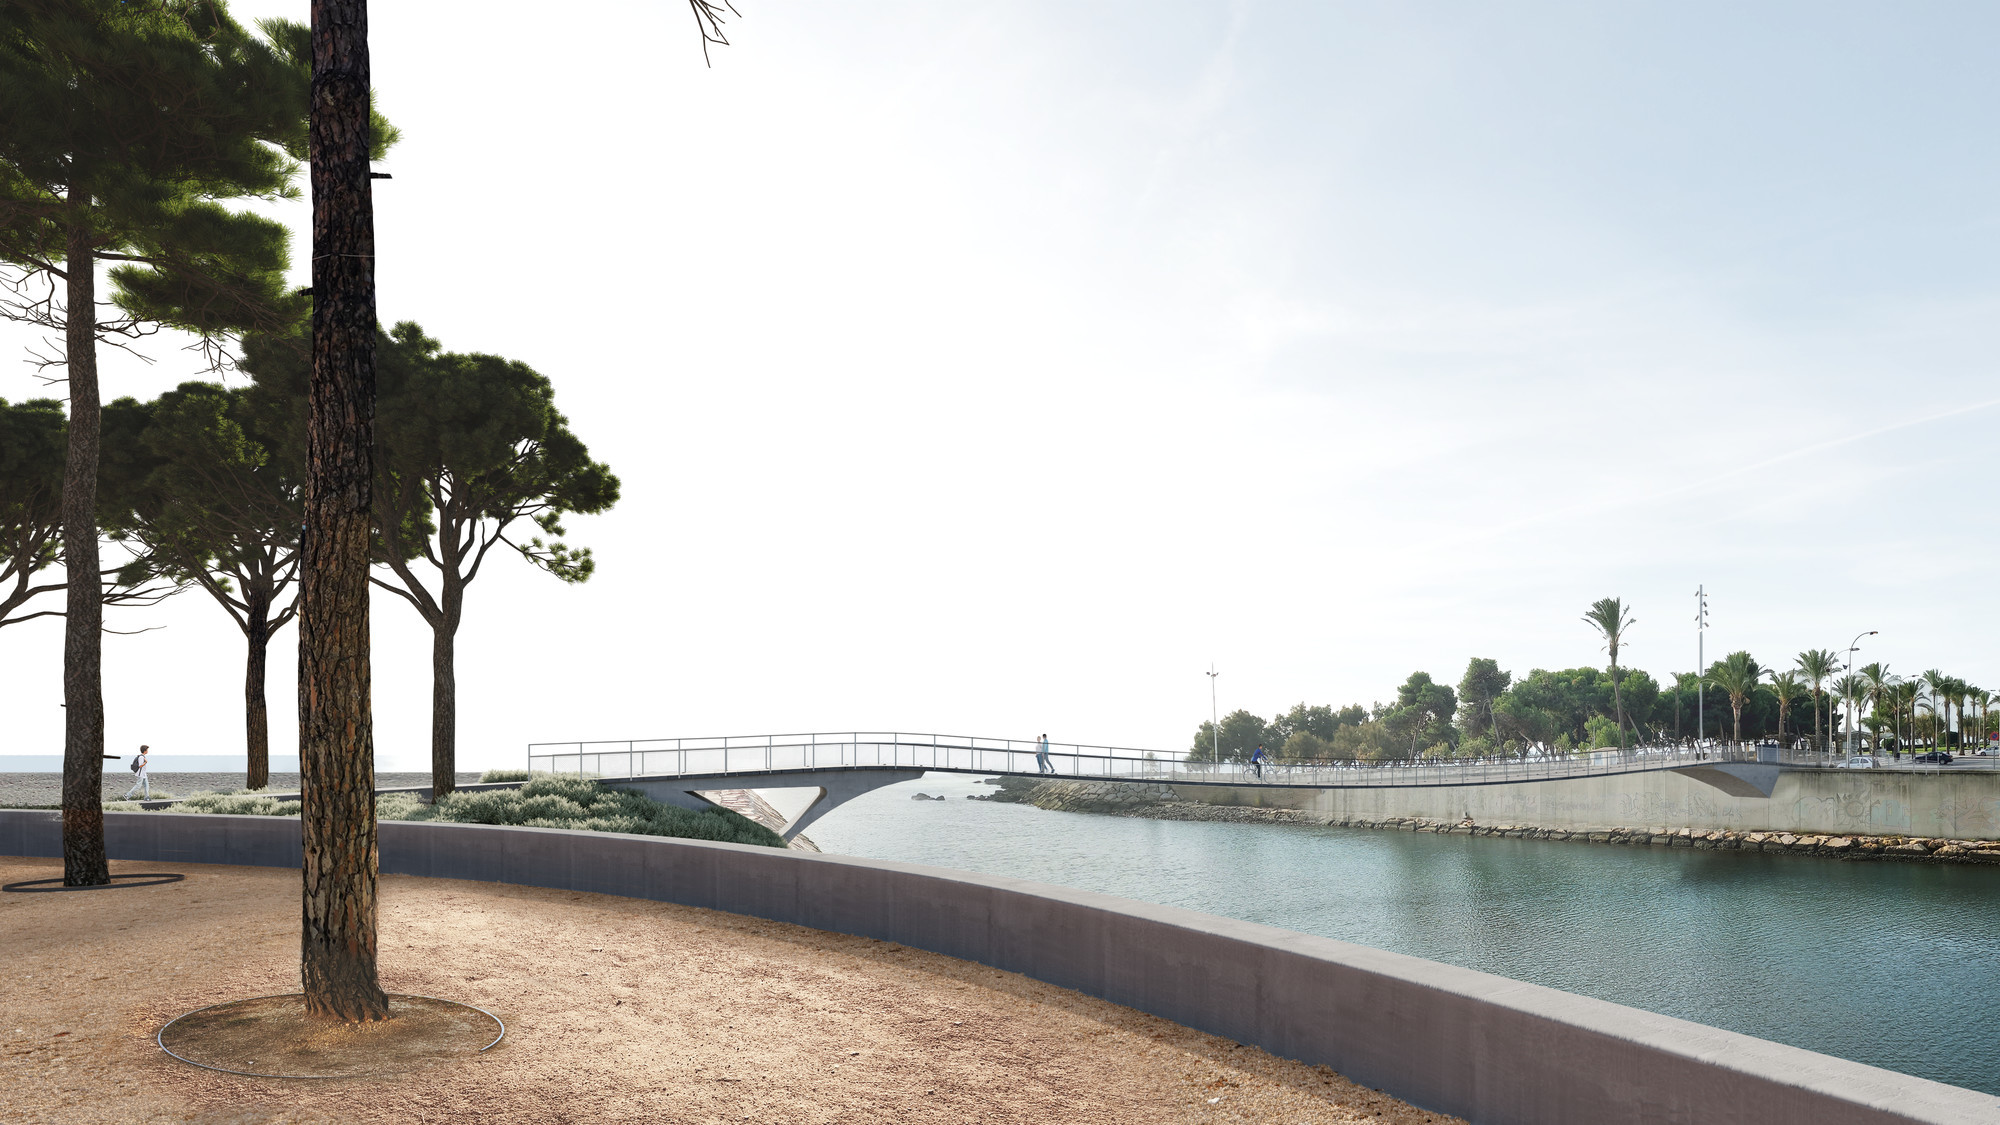 Bridge Design: schlaich bergermann partner / Rendering: Supernova Visual